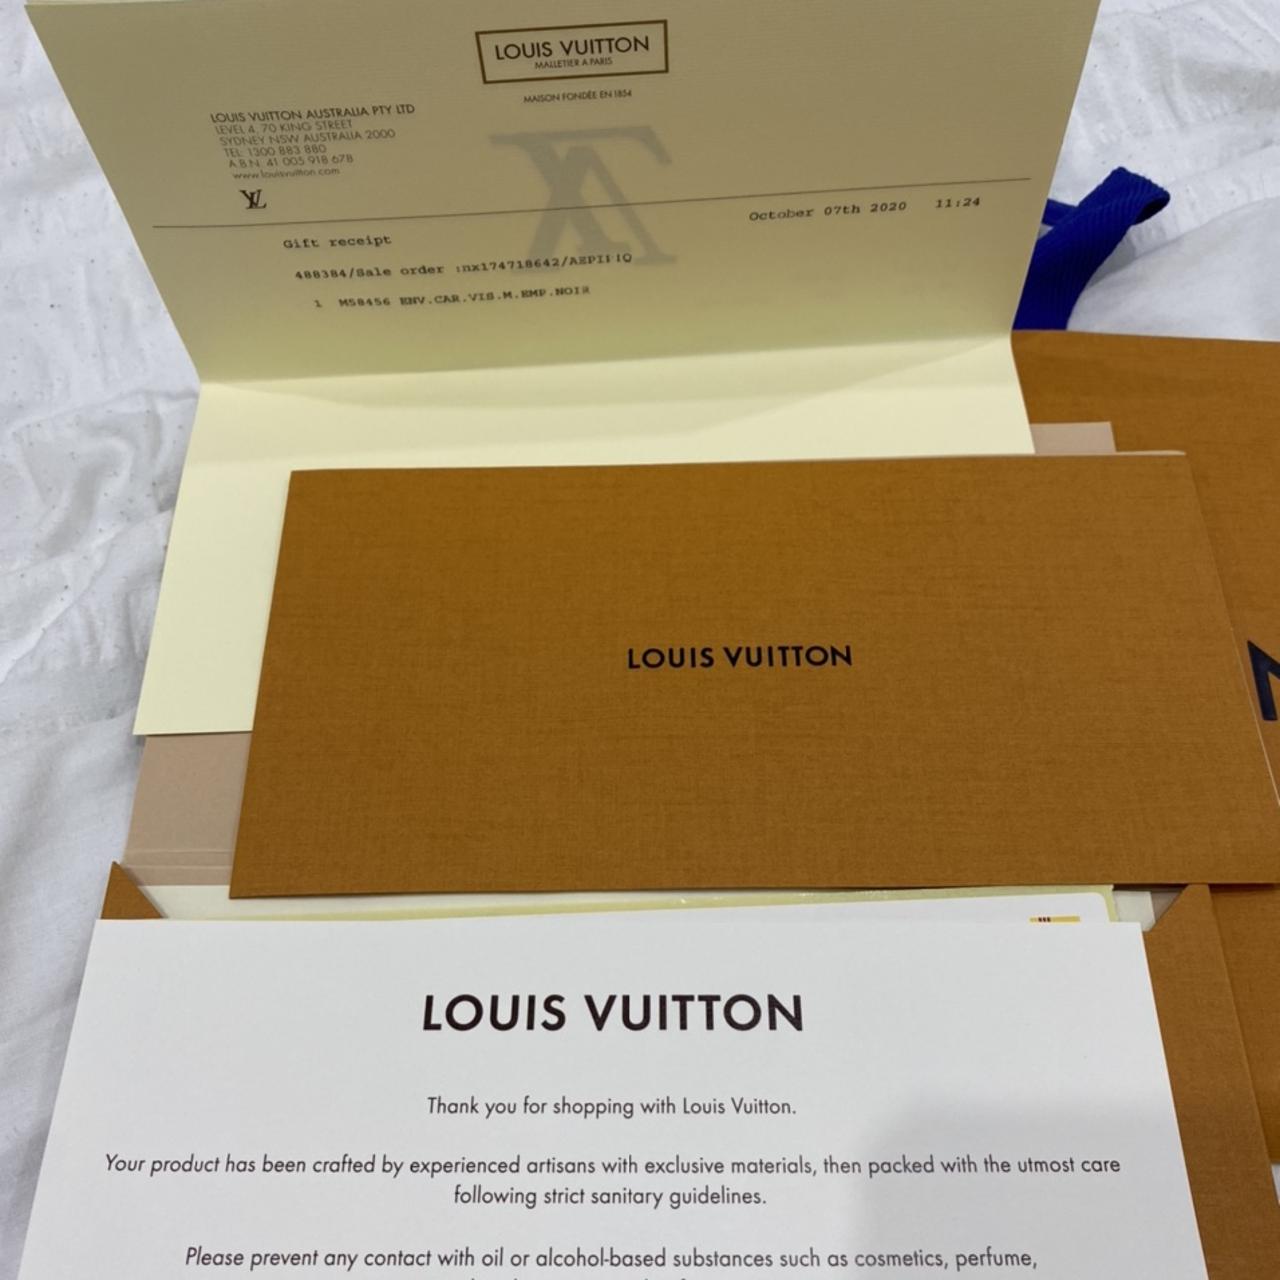 Louis Vuitton Malletiera Paris Maison Fondeeen 1854 Tan Brown Dustbag Cover